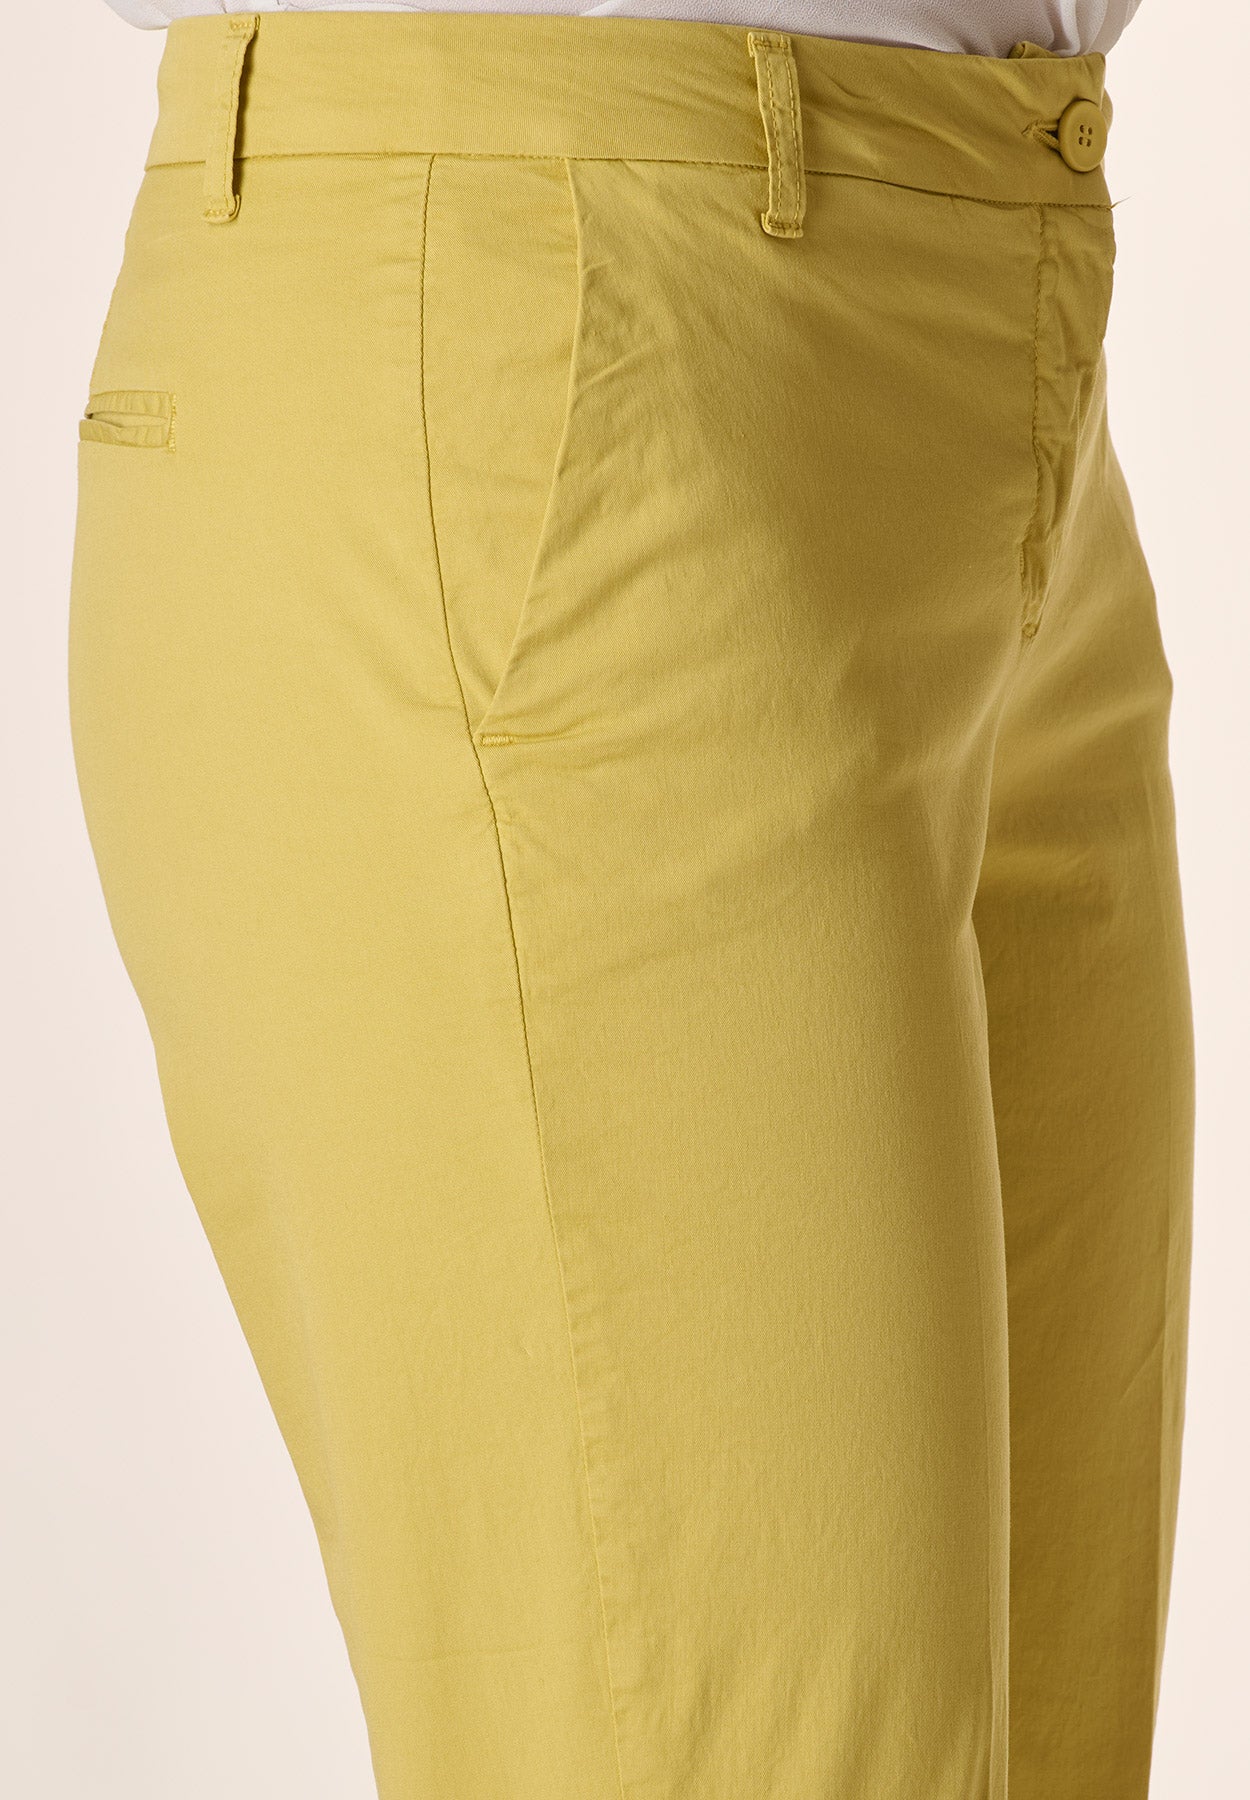 Pantalone chinos giallo cotone stretch